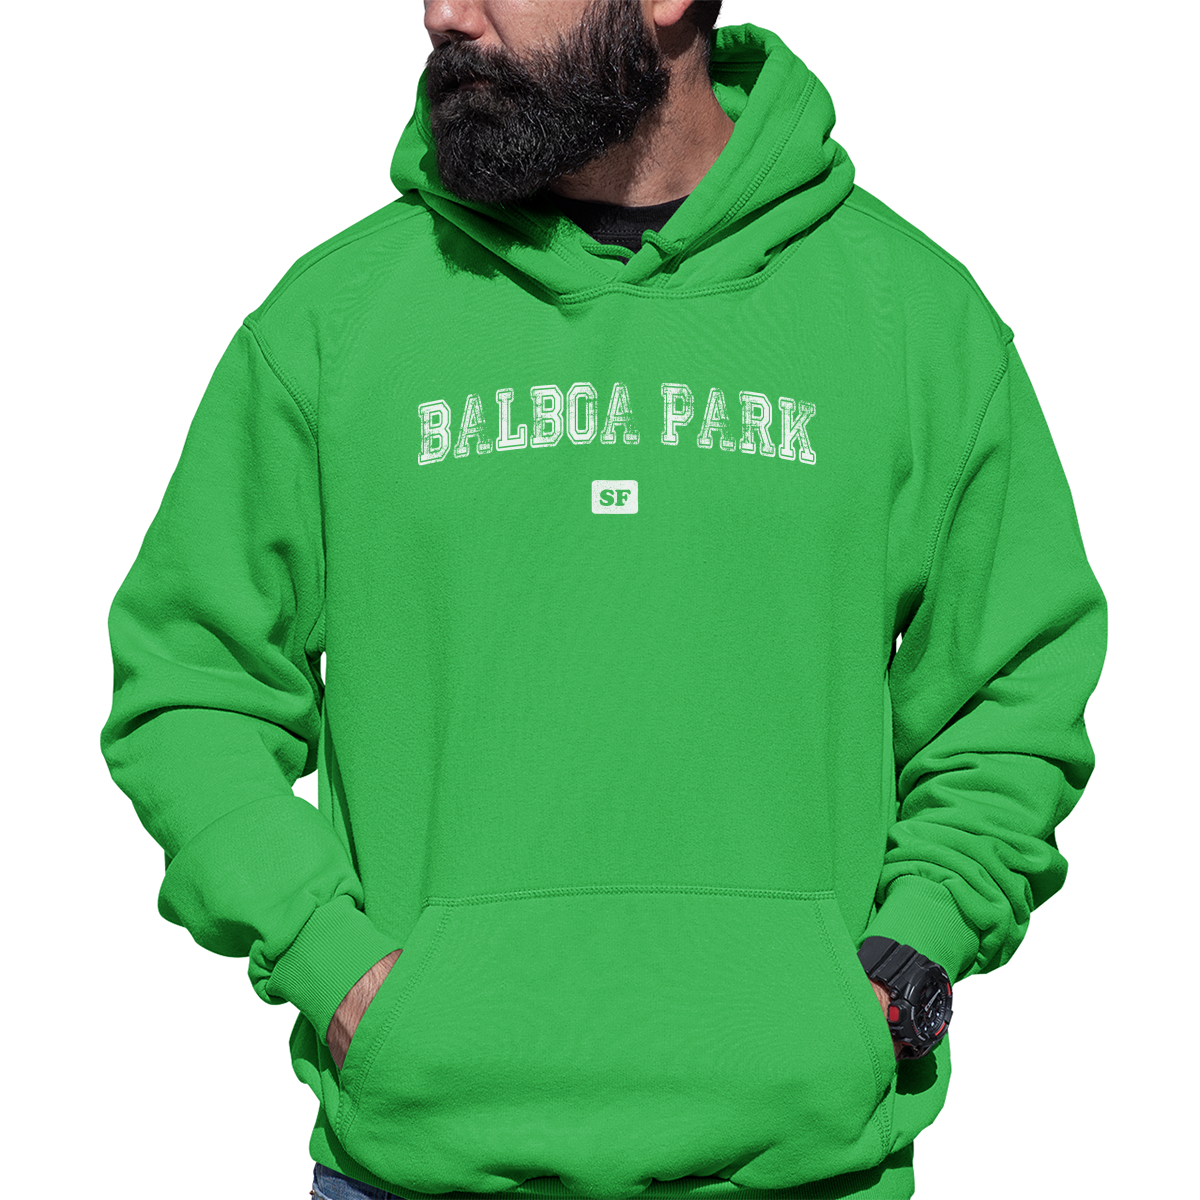 Balboa Park Sf Represent Unisex Hoodie | Green